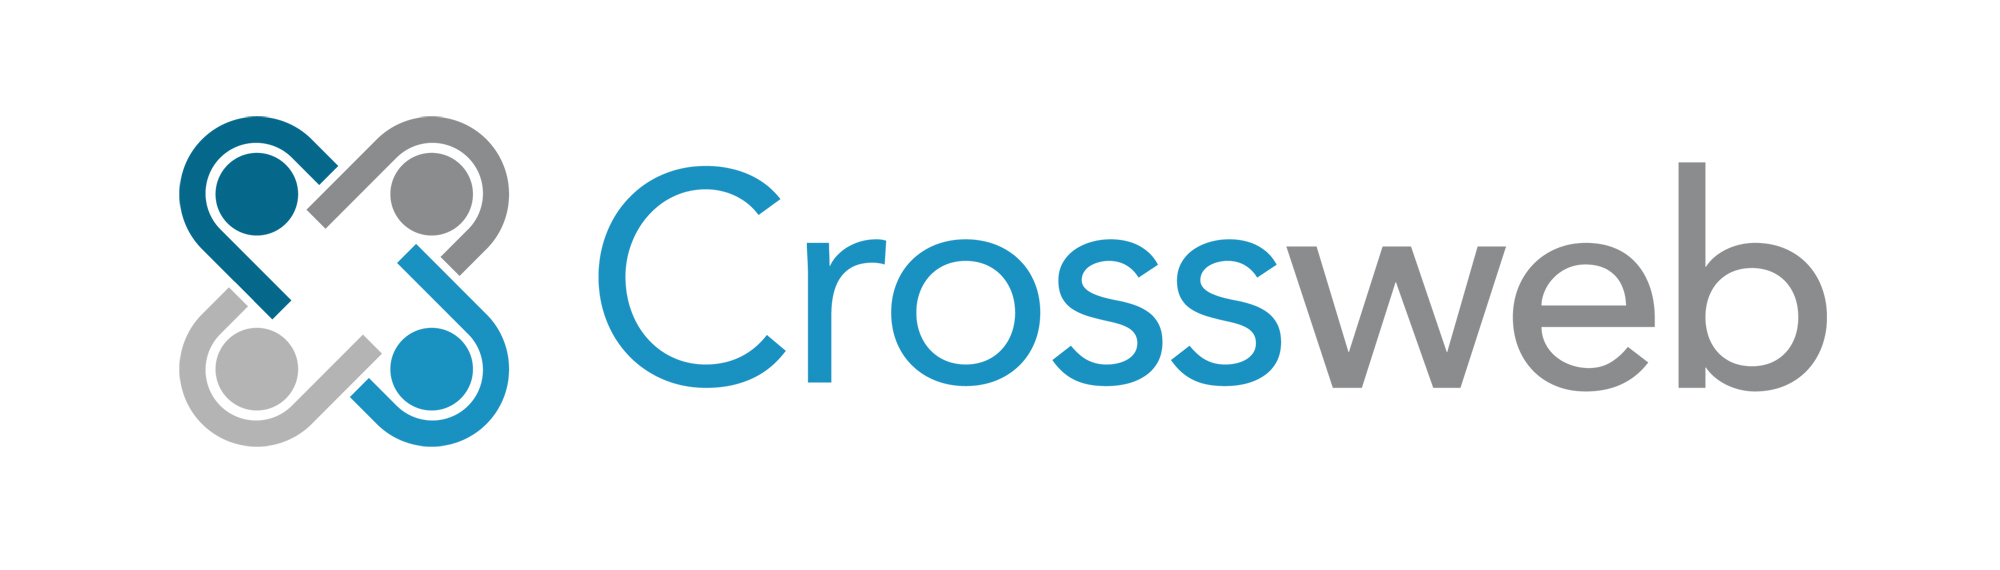 crossweb logo